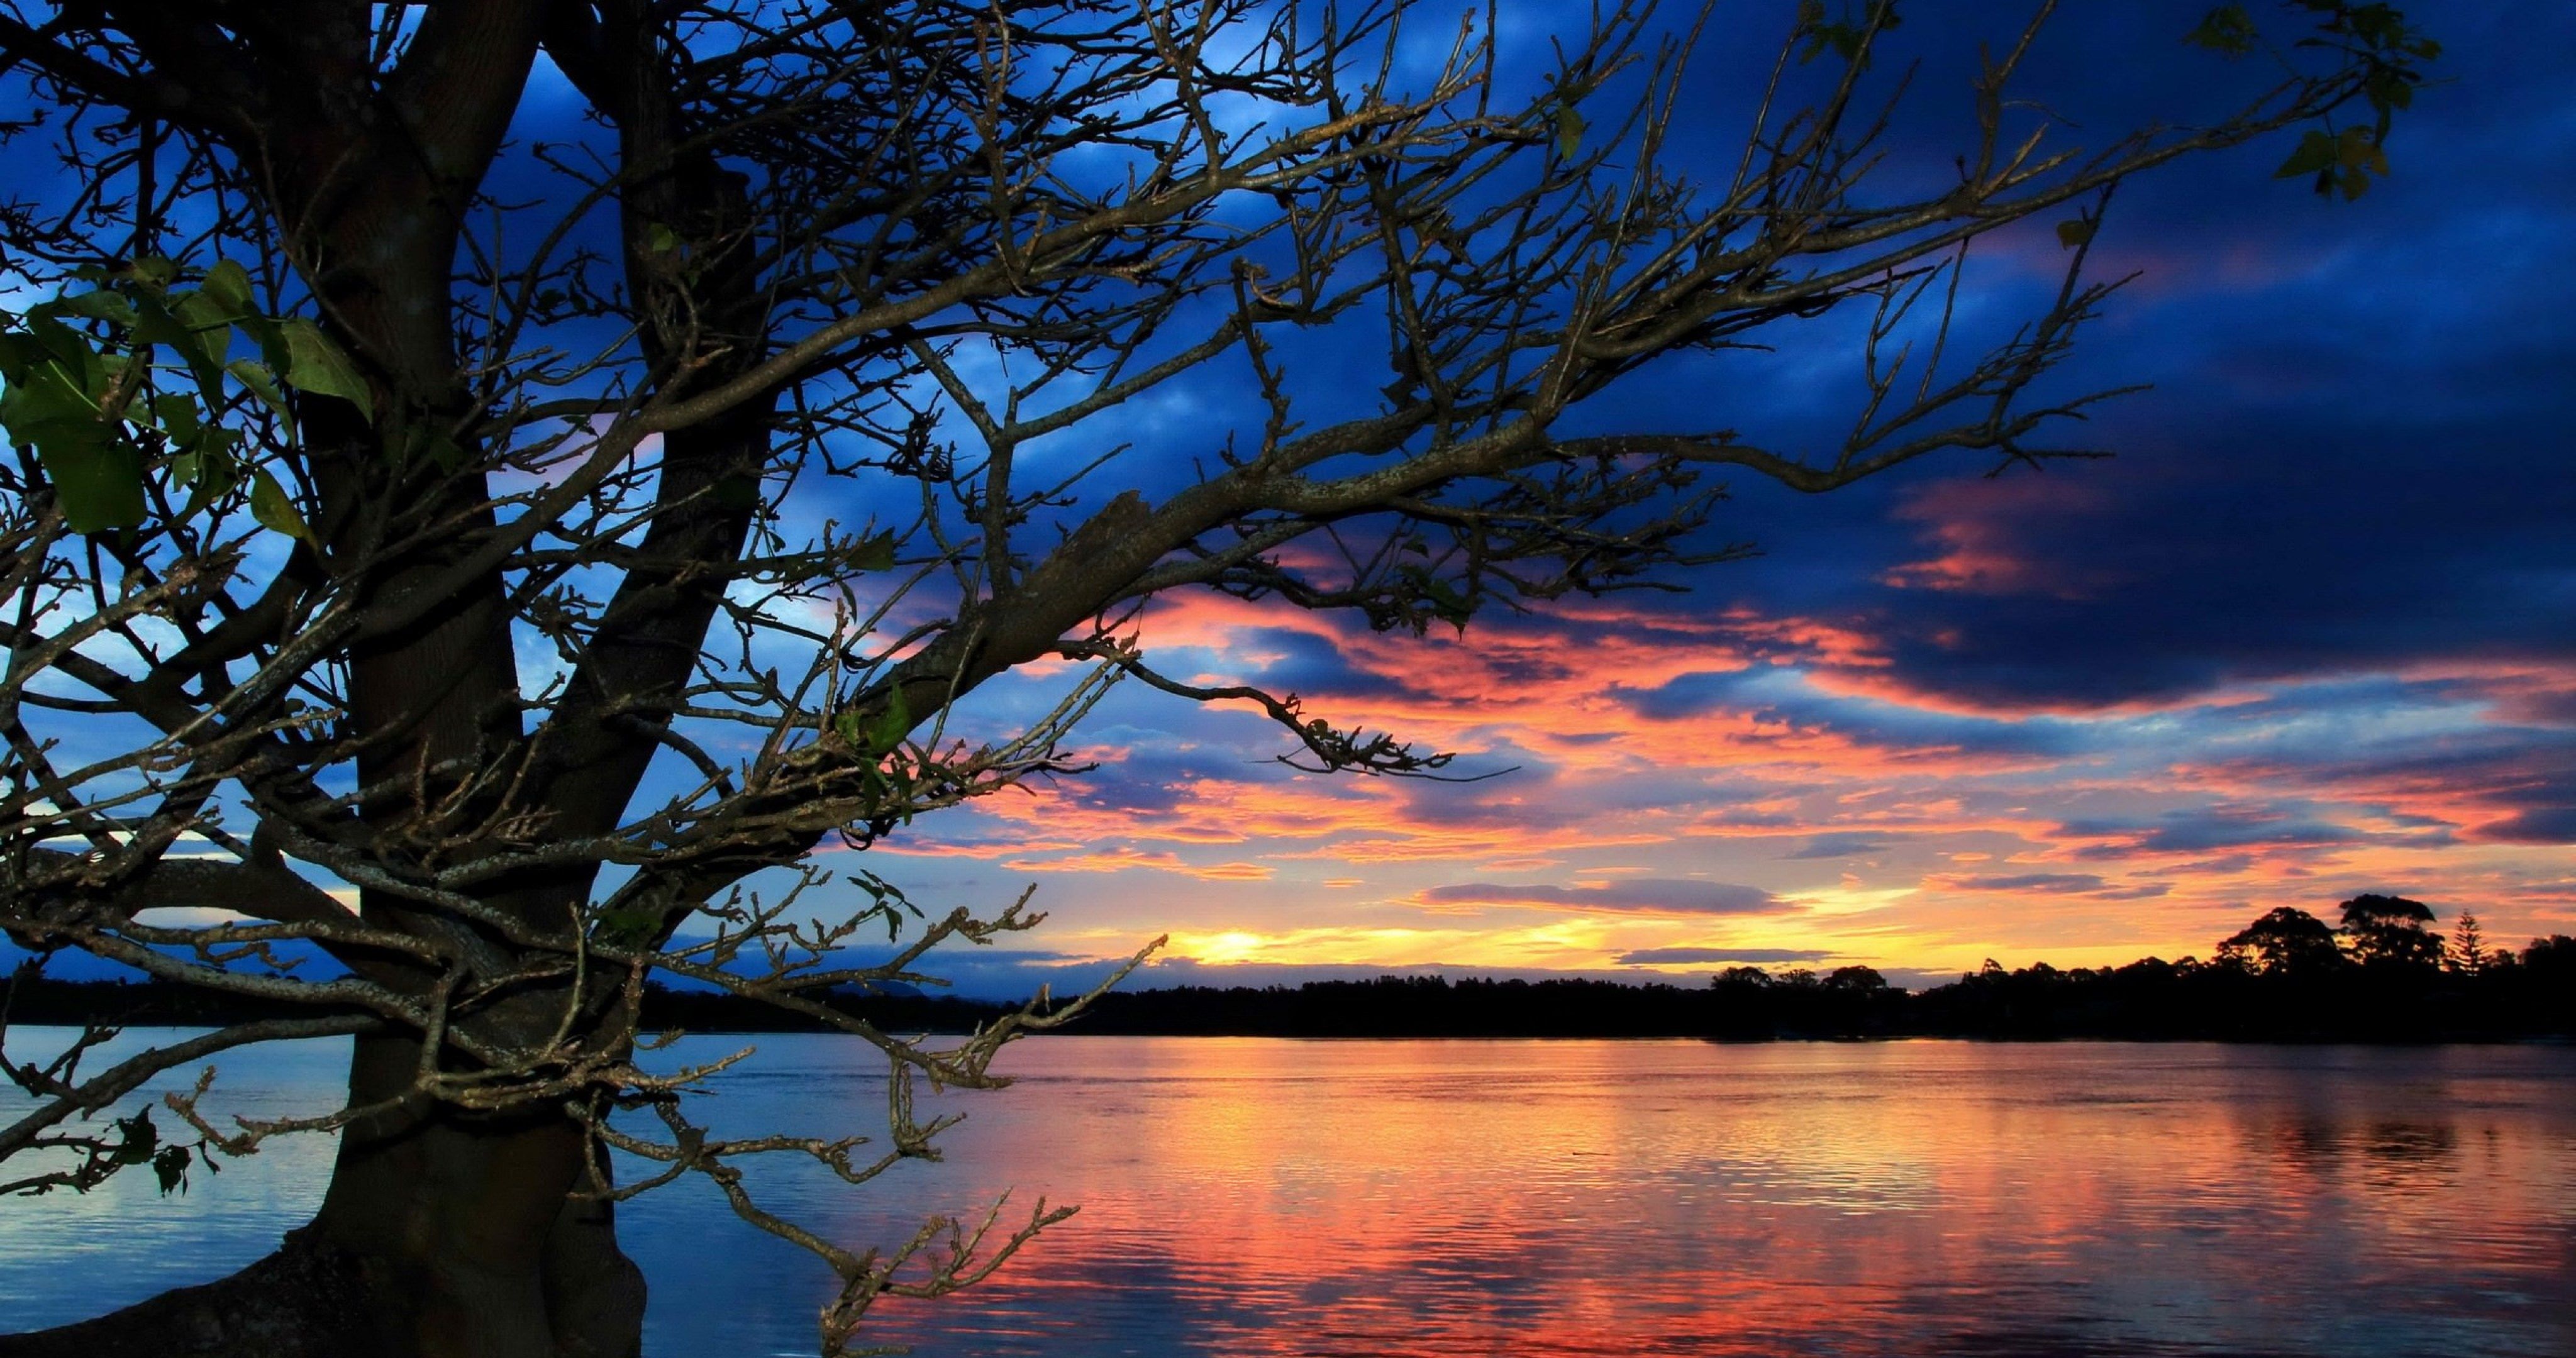 sunset lake and tree 4k ultra HD wallpaper High quality walls